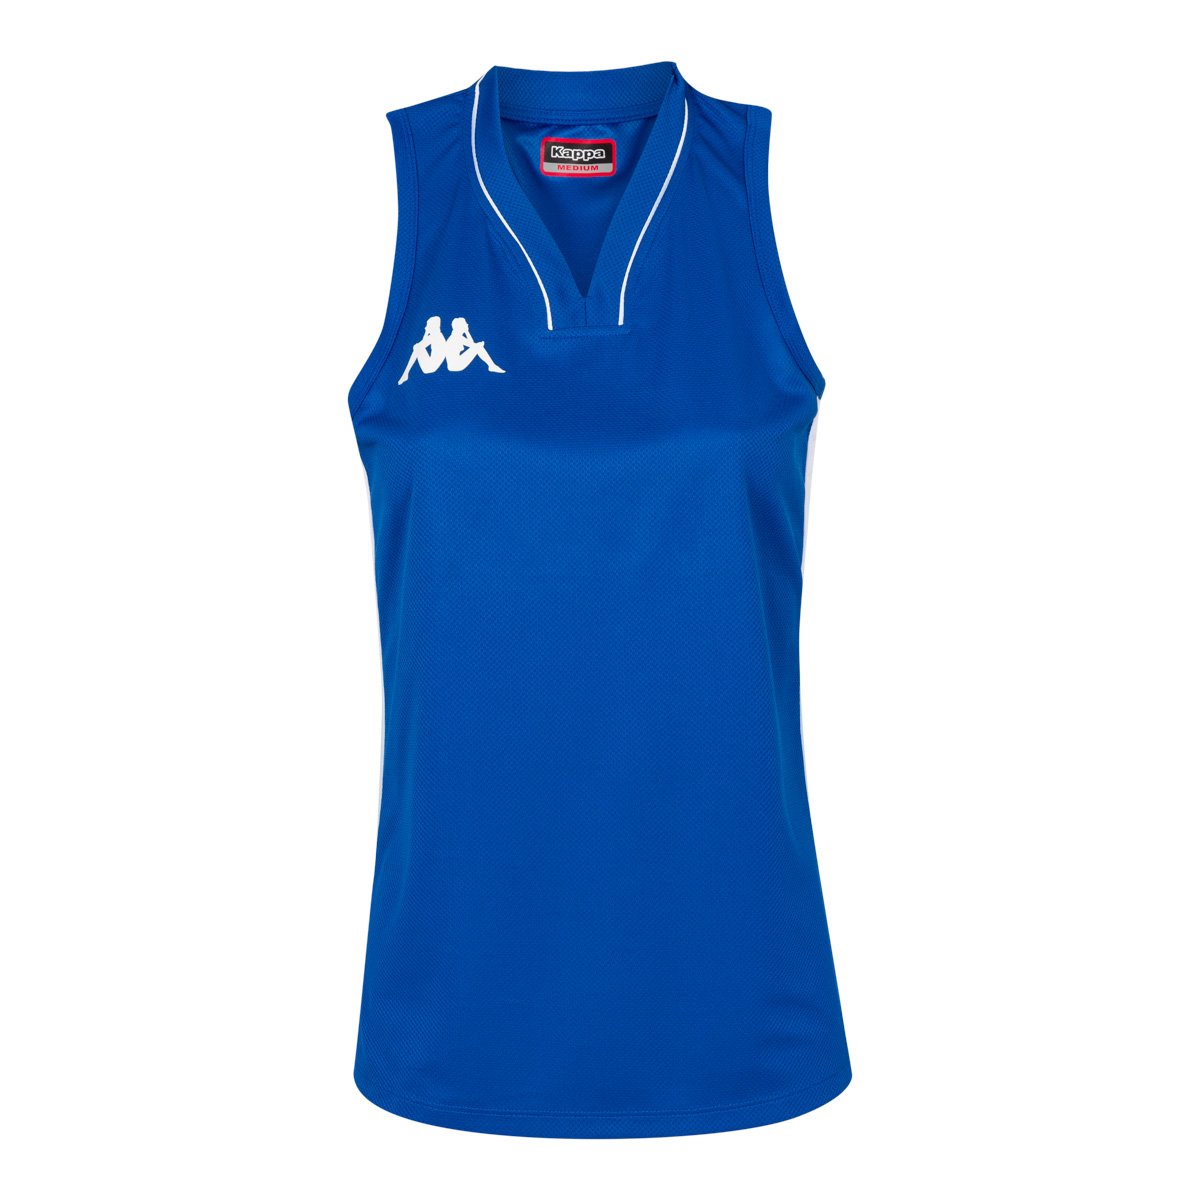 Camiseta de juego Basket Caira Azul Mujer - Imagen 1